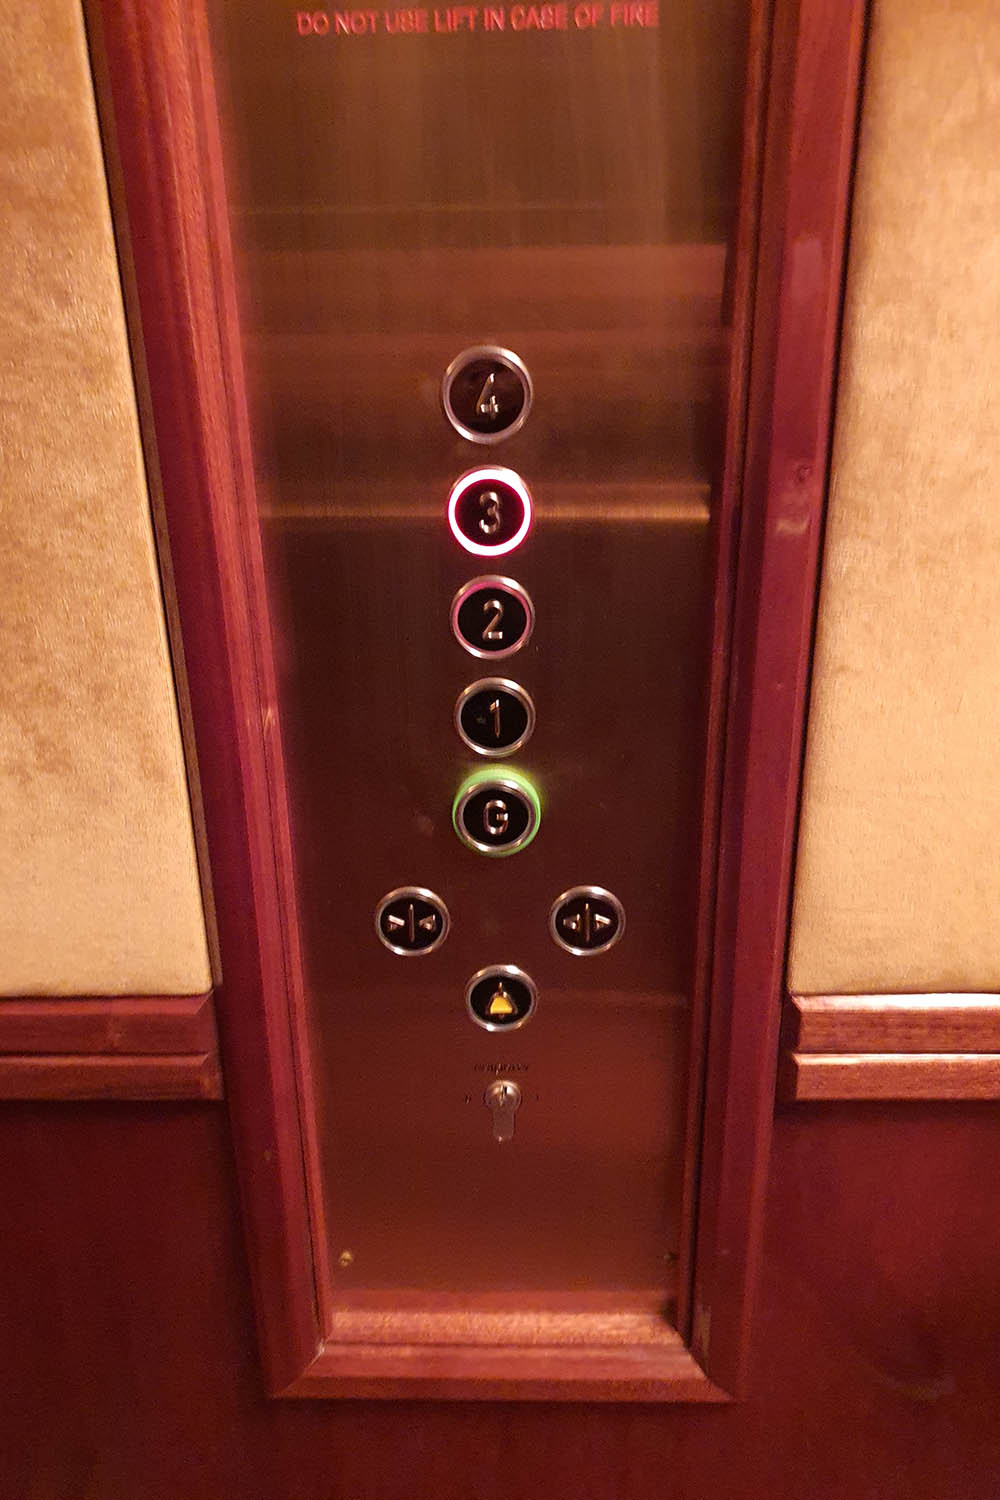 bespoke lift control panel